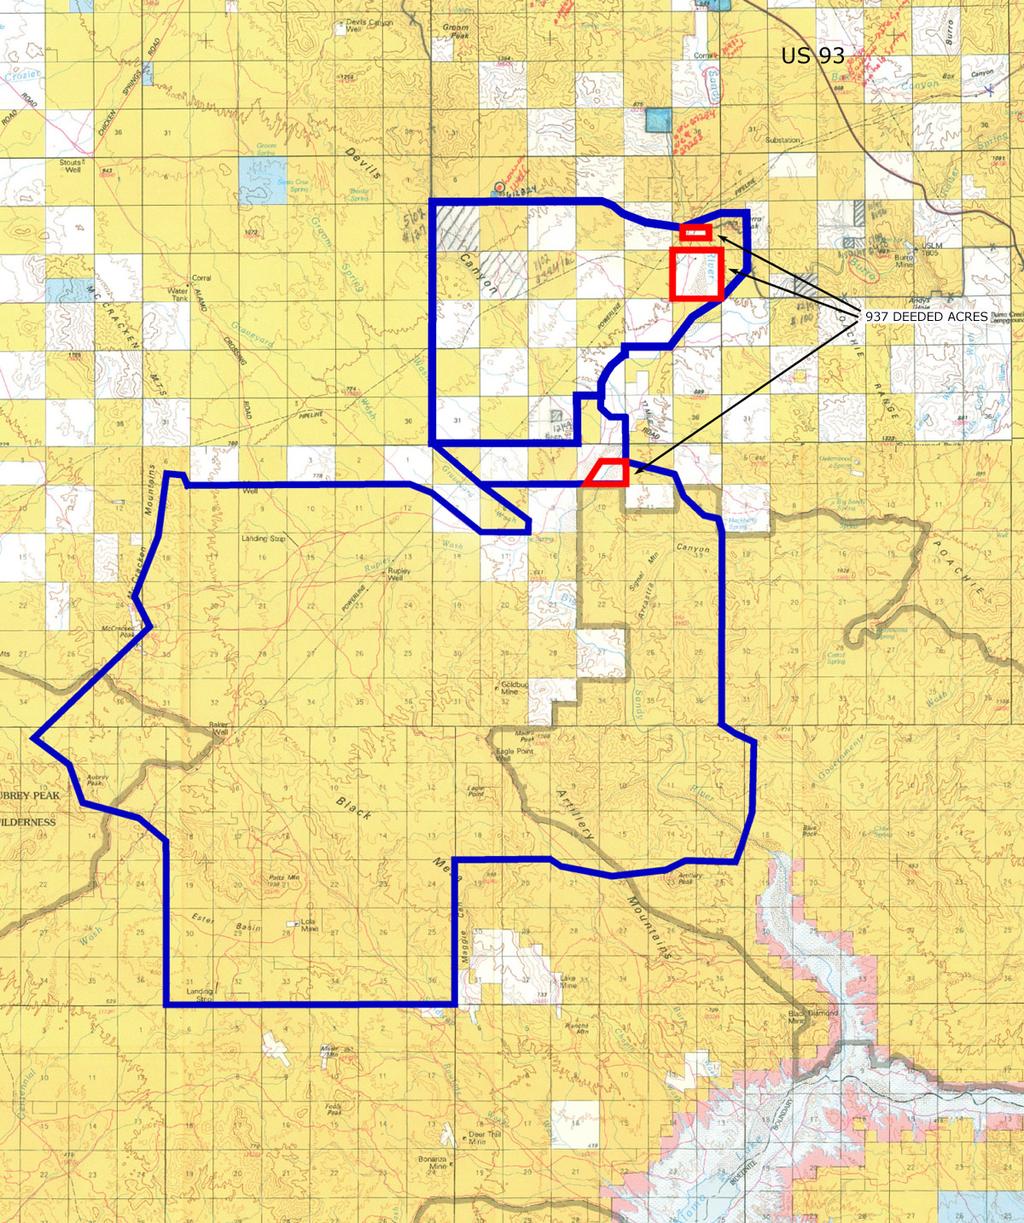 Tenure Map Basemap source: BLM Surface Management, Bagdad and Alamo